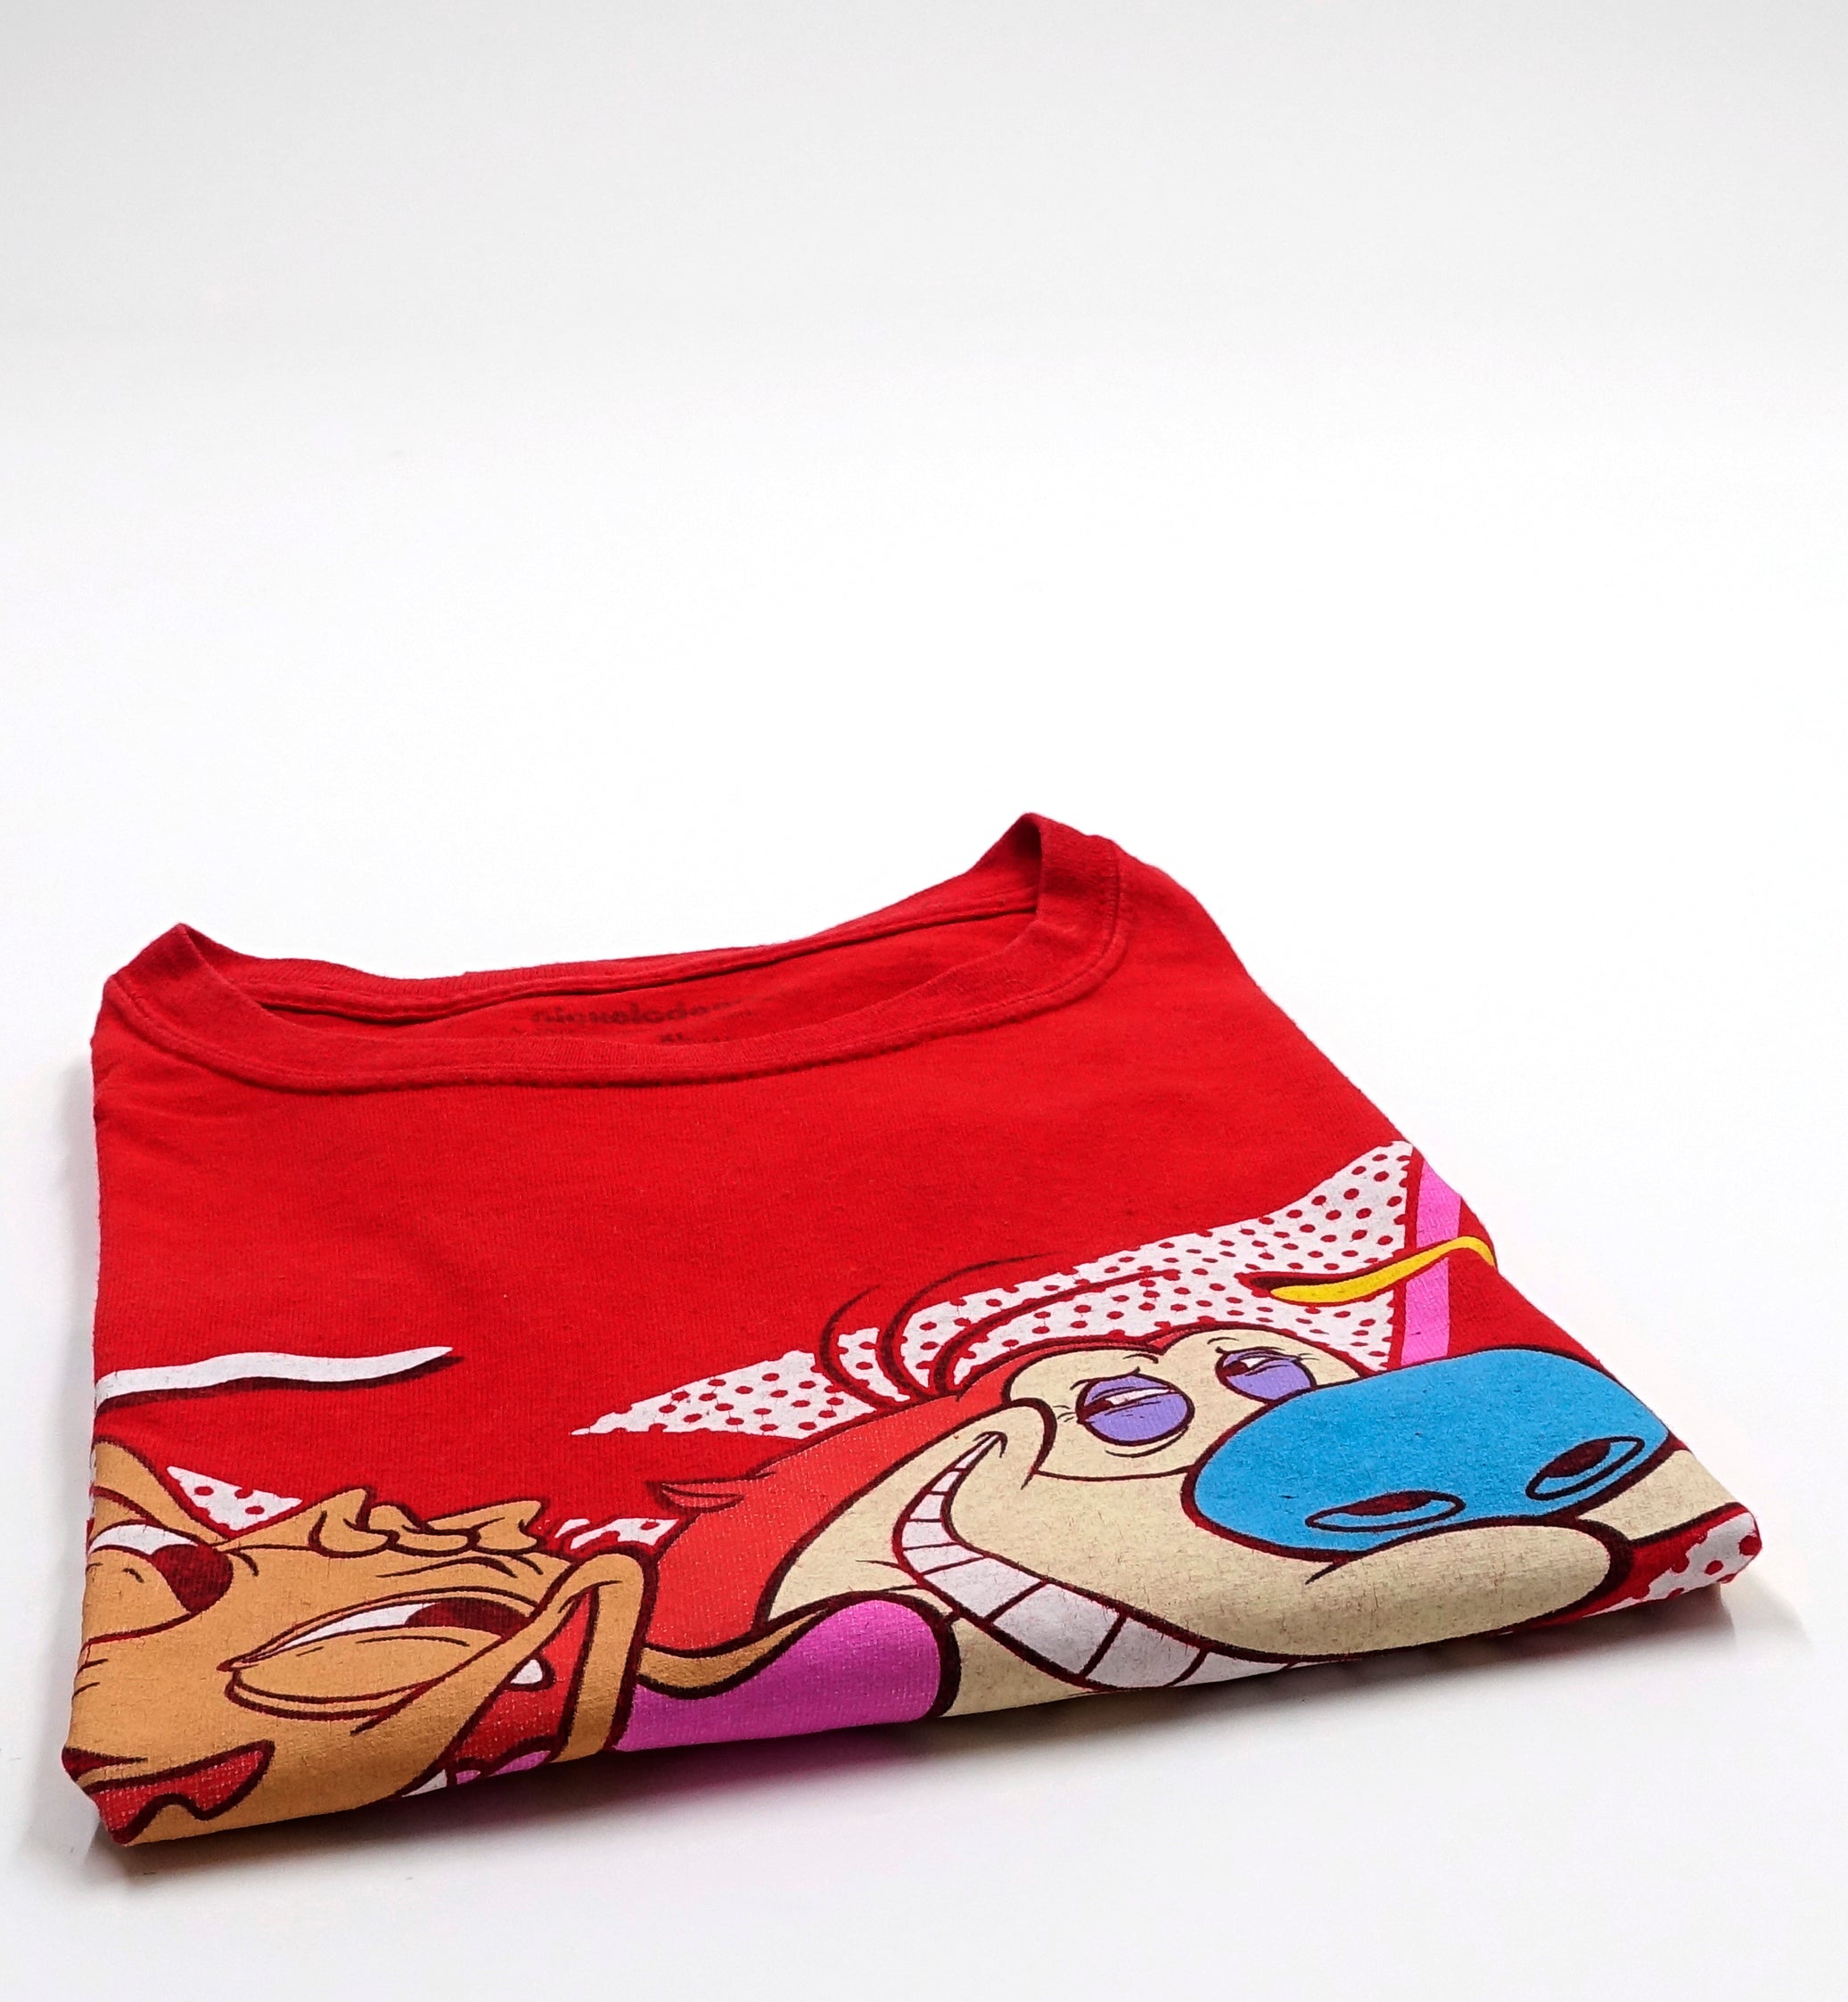 Ren & Stimpy - Pop Art Ren & Stimpy Nickelodeon ©2018 Shirt Size XL